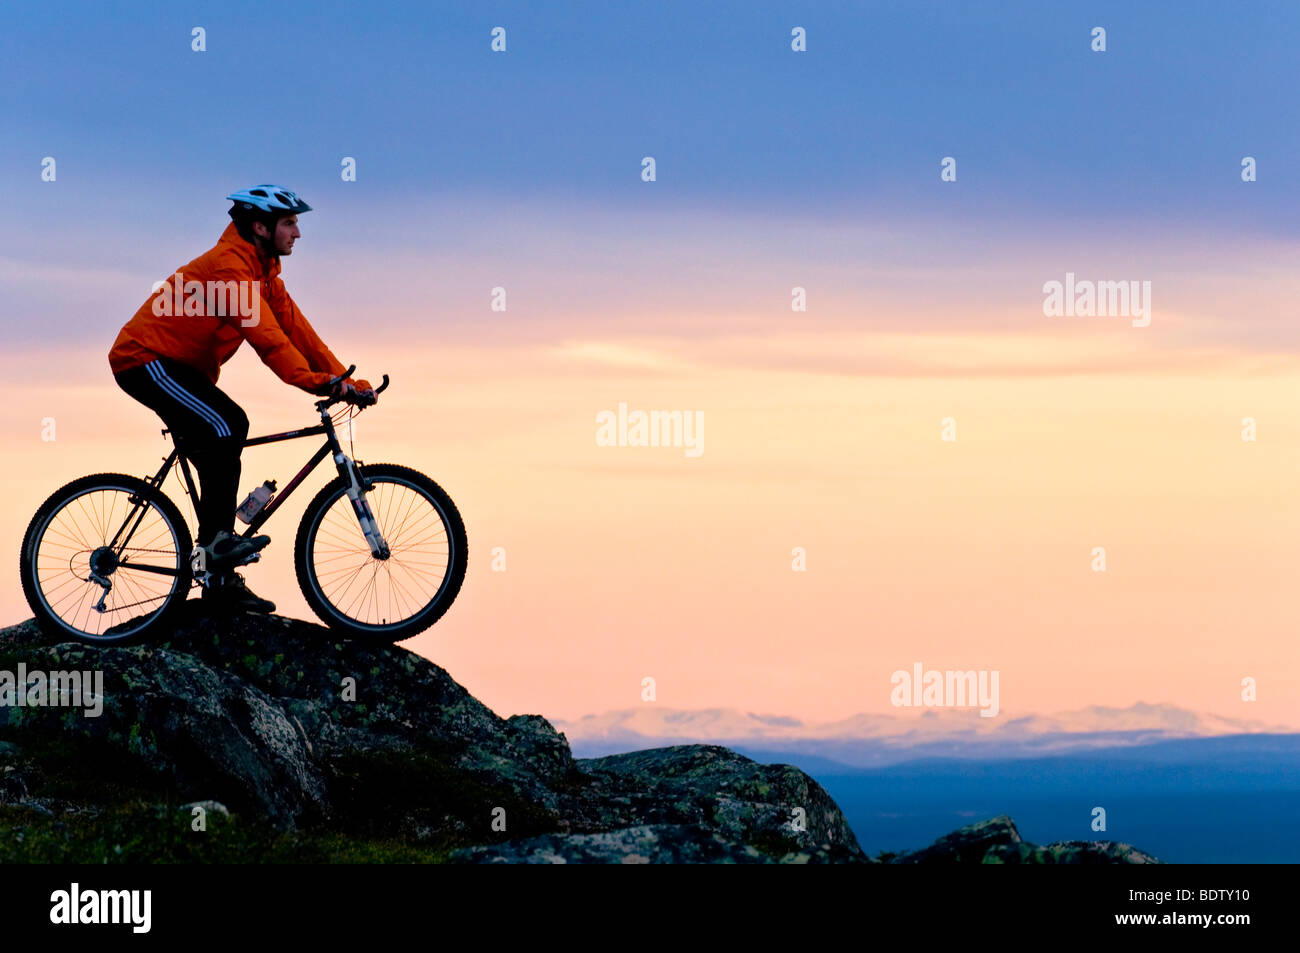 mountainbiker auf dem berg dundret, gaellivare, lappland, schweden, downhill cyclist on the mount dundret in swedish lapland Stock Photo